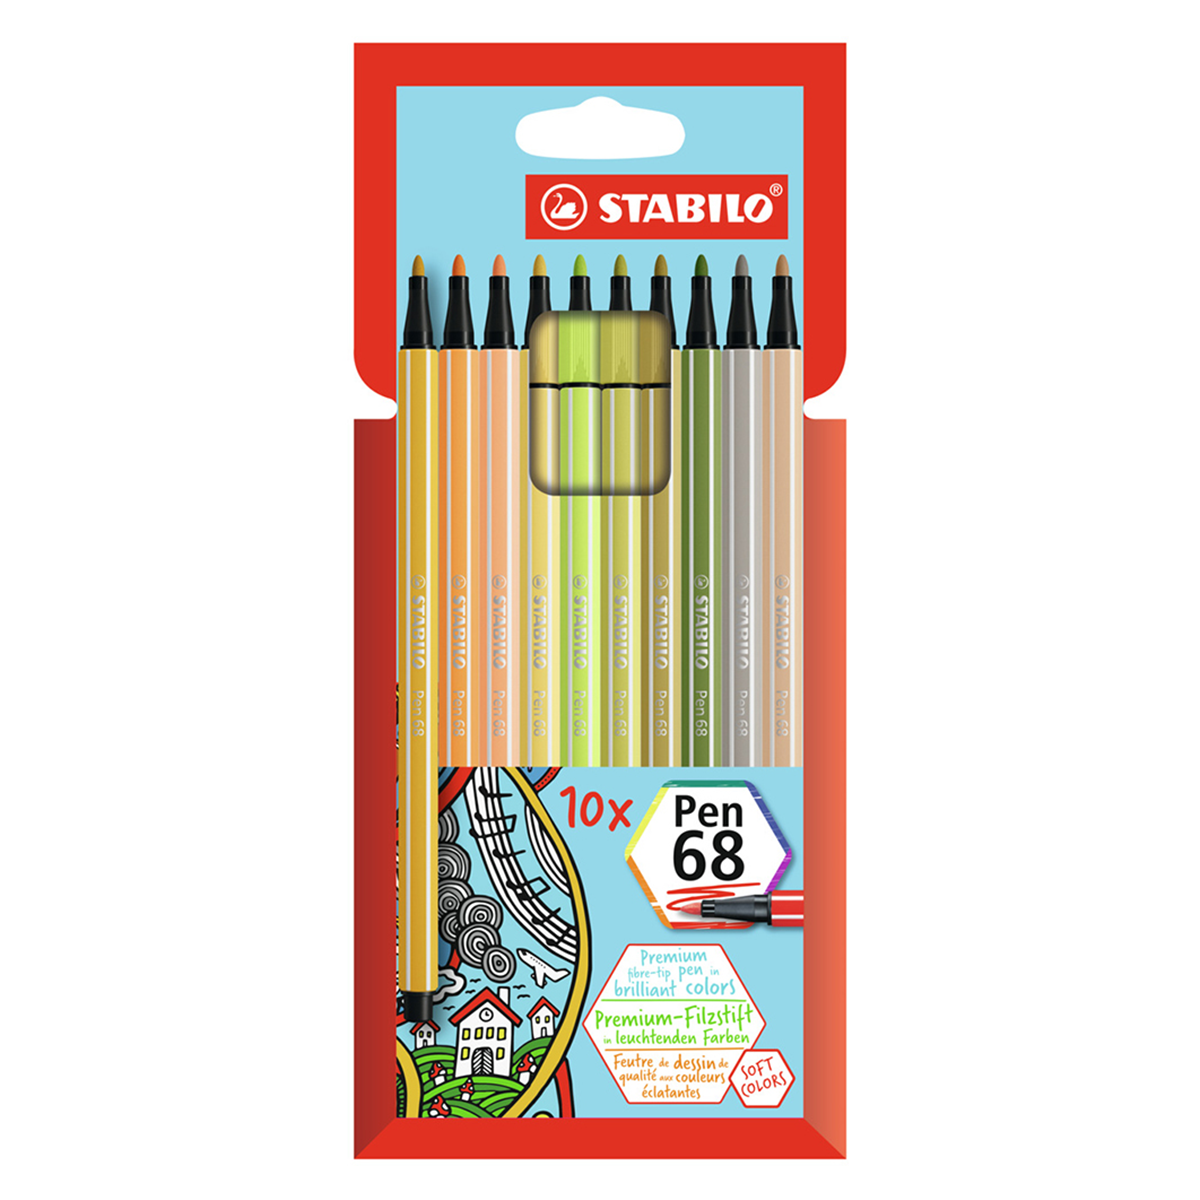 Stabilo Pen 68 Brush Pen Set, 30 Colors